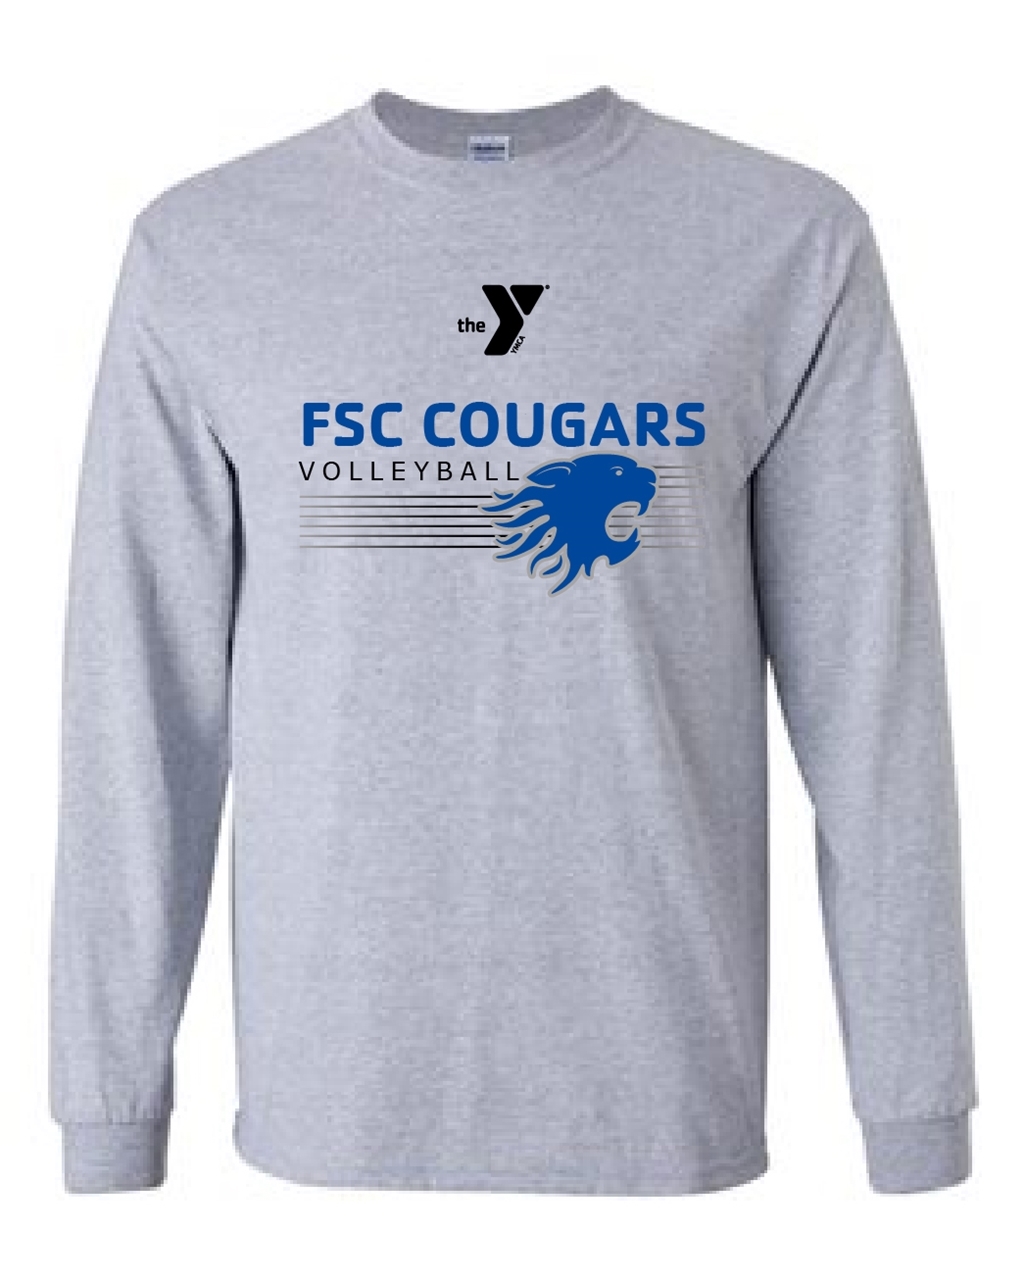 Cougars Volleyball Long Sleeve Shirt | Lawlor's Custom Sportswear